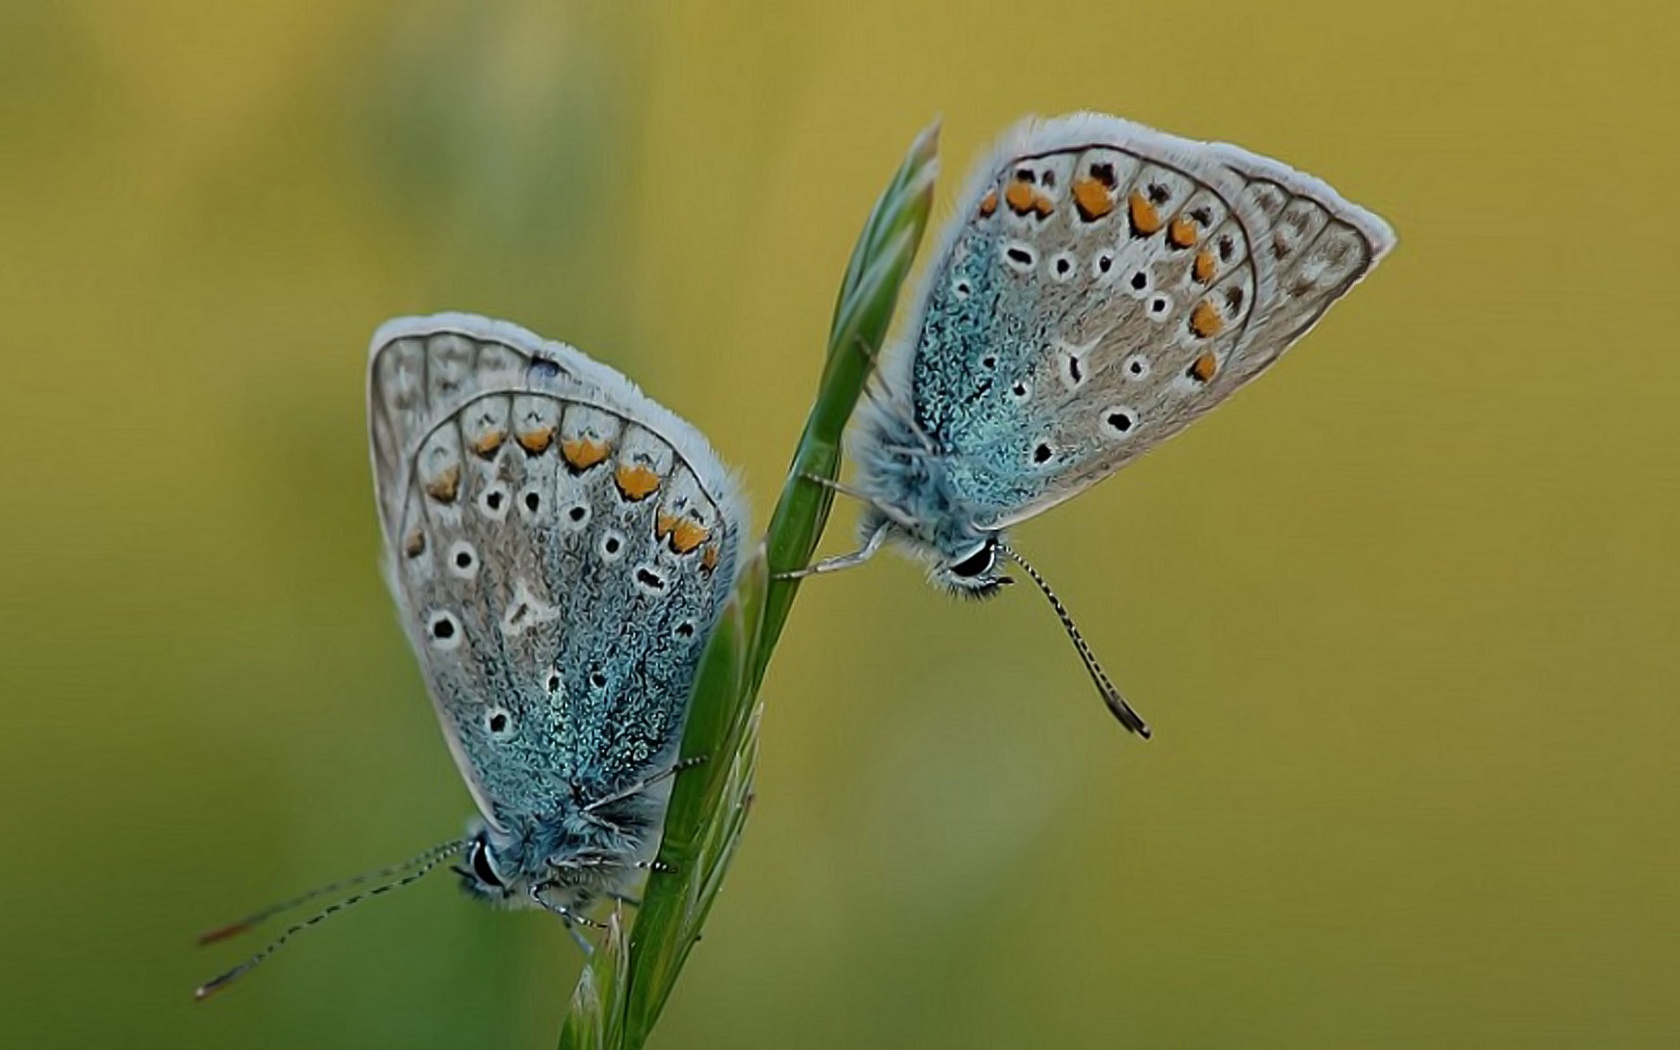 Two Butterflies Sitting On A Grass